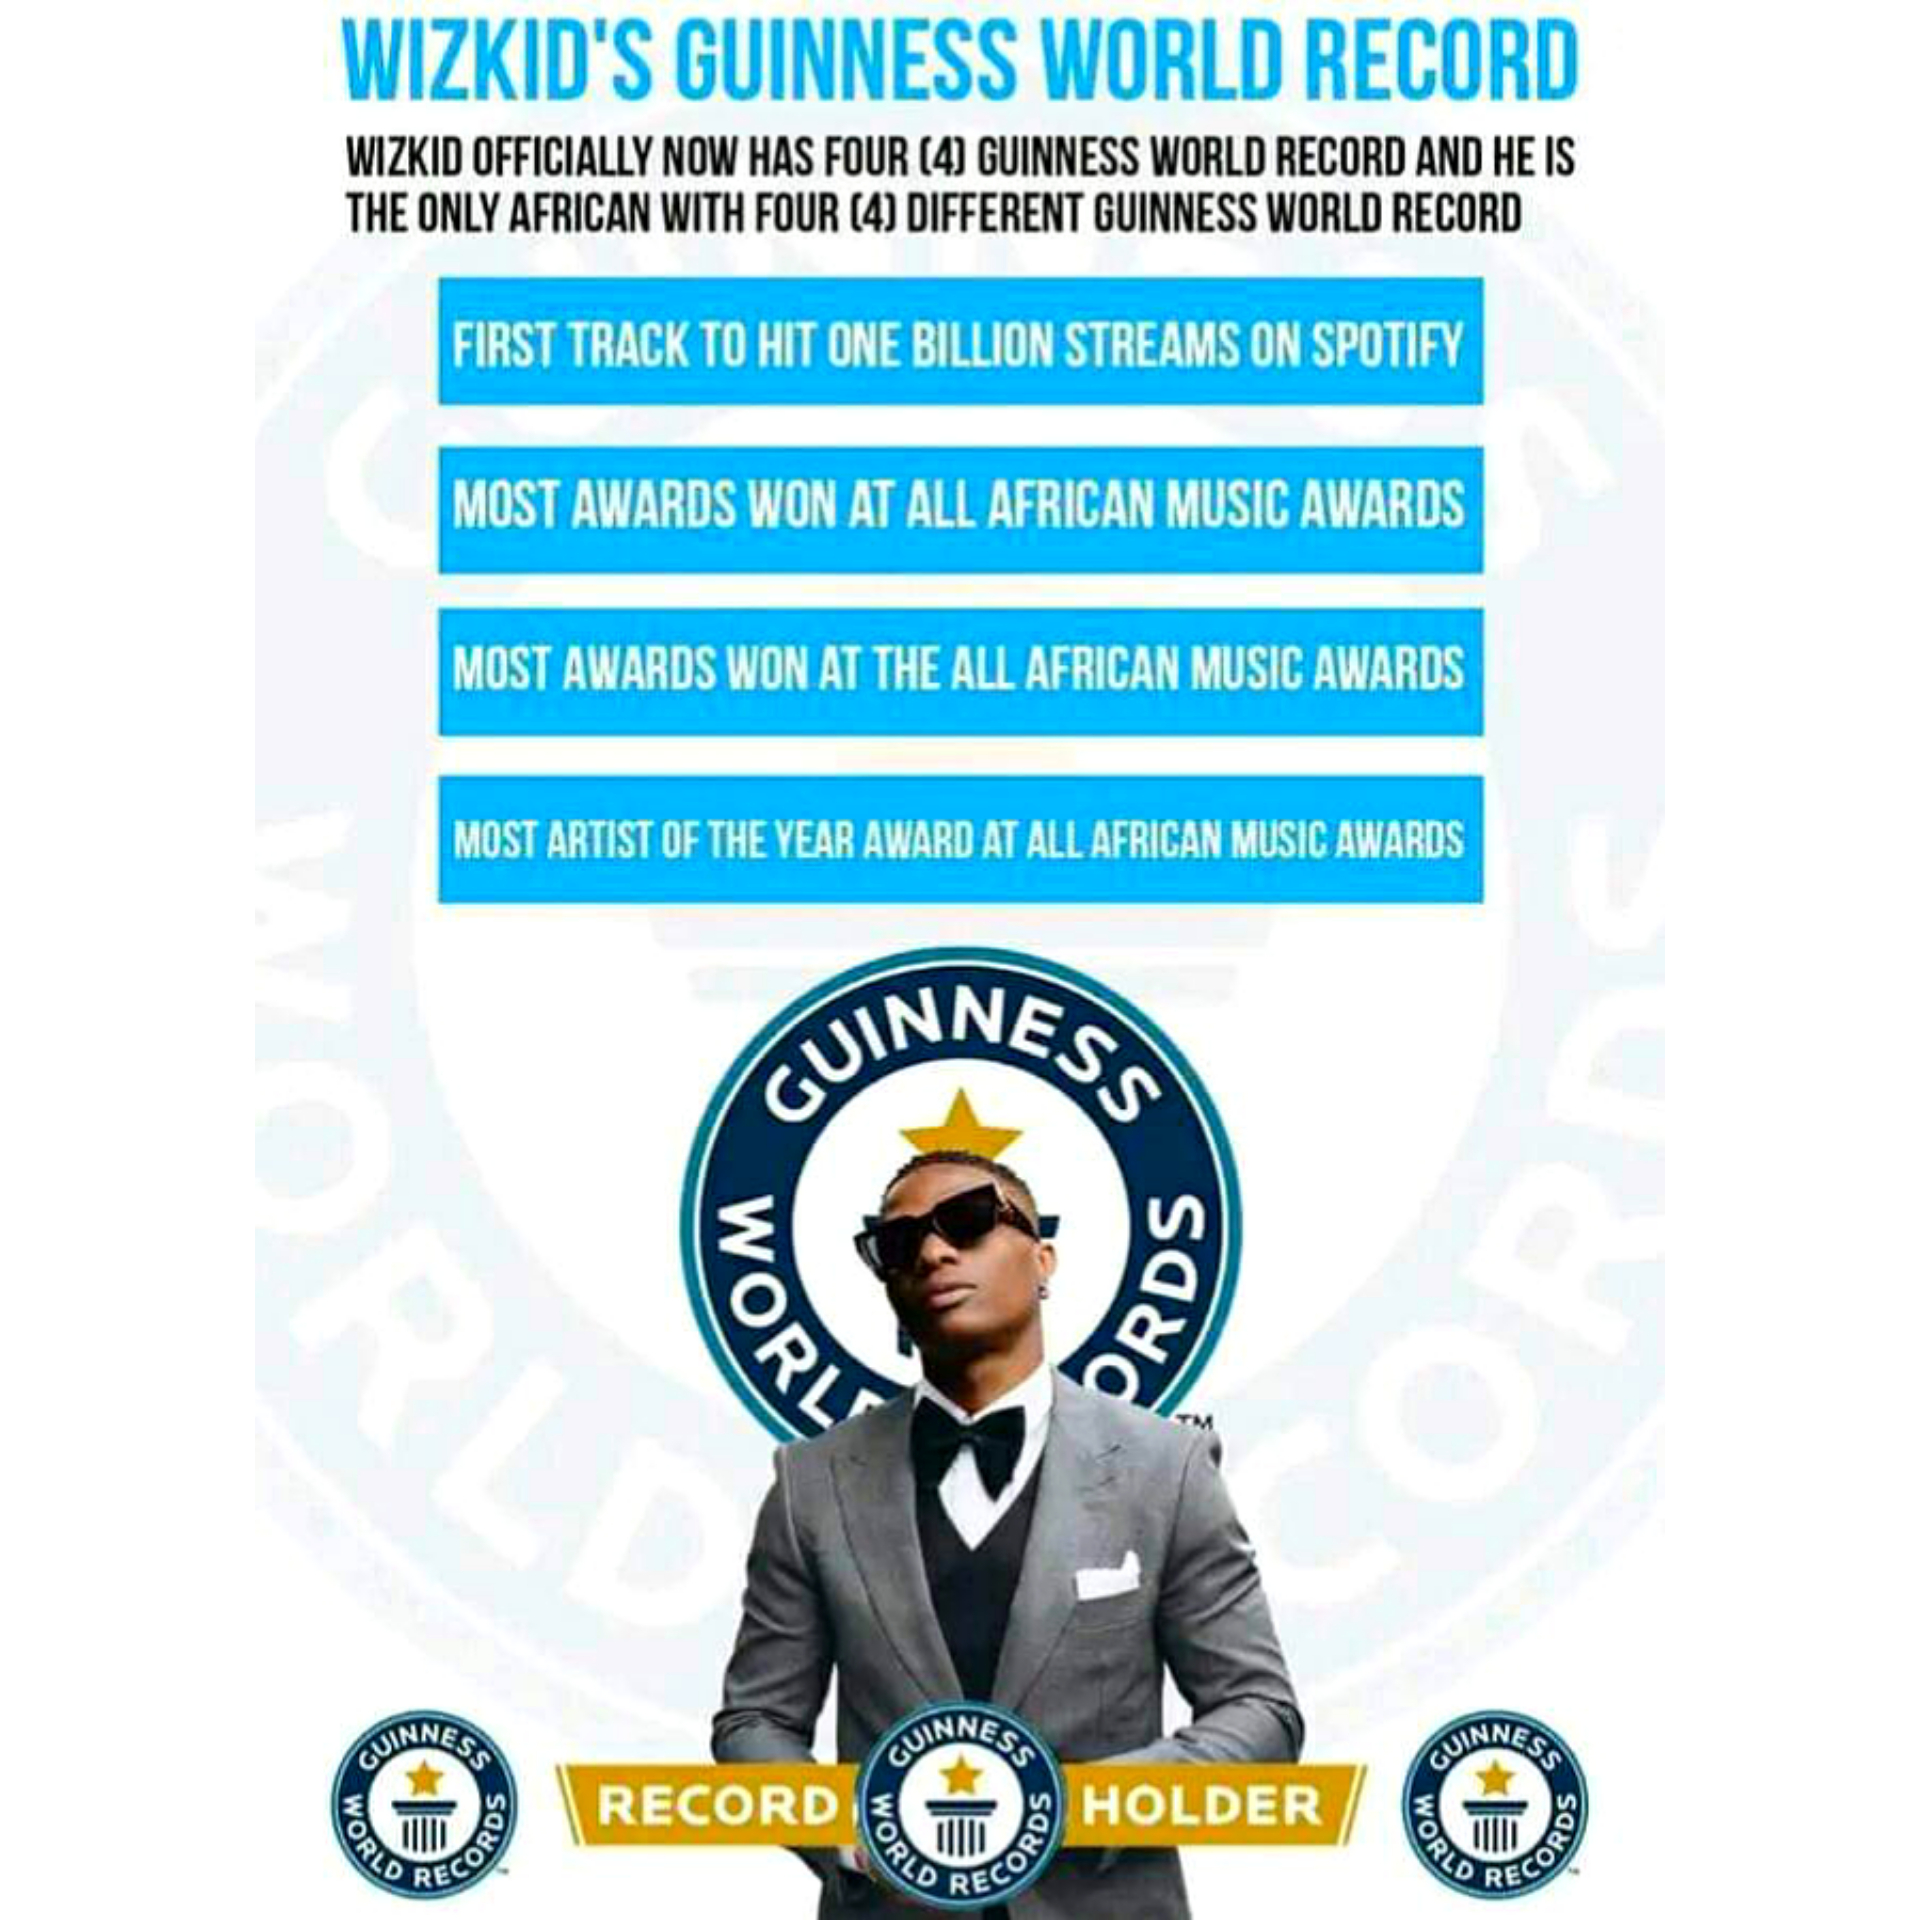 Wizkid Guinness World Record wins